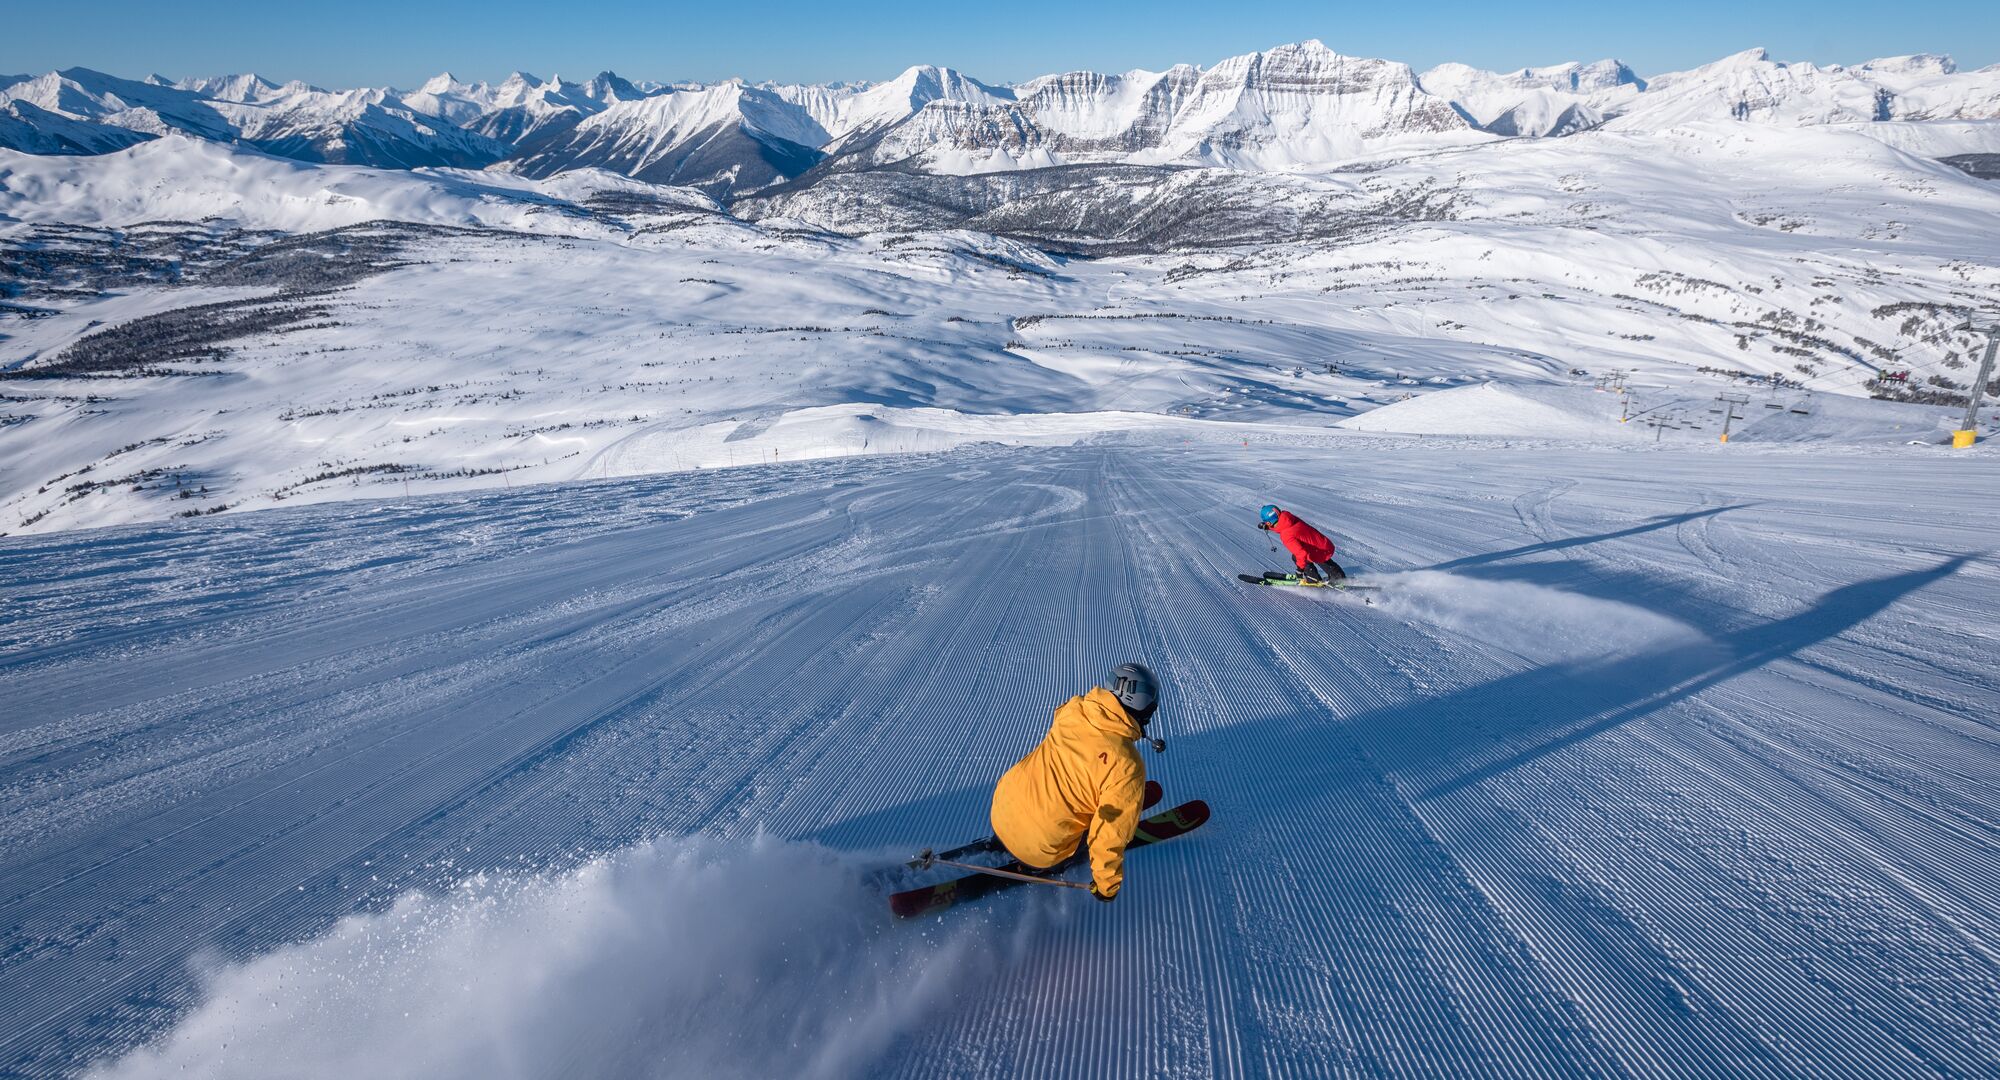 Two skiers on a run at Sunshine Village Ski Resort in Banff National Park